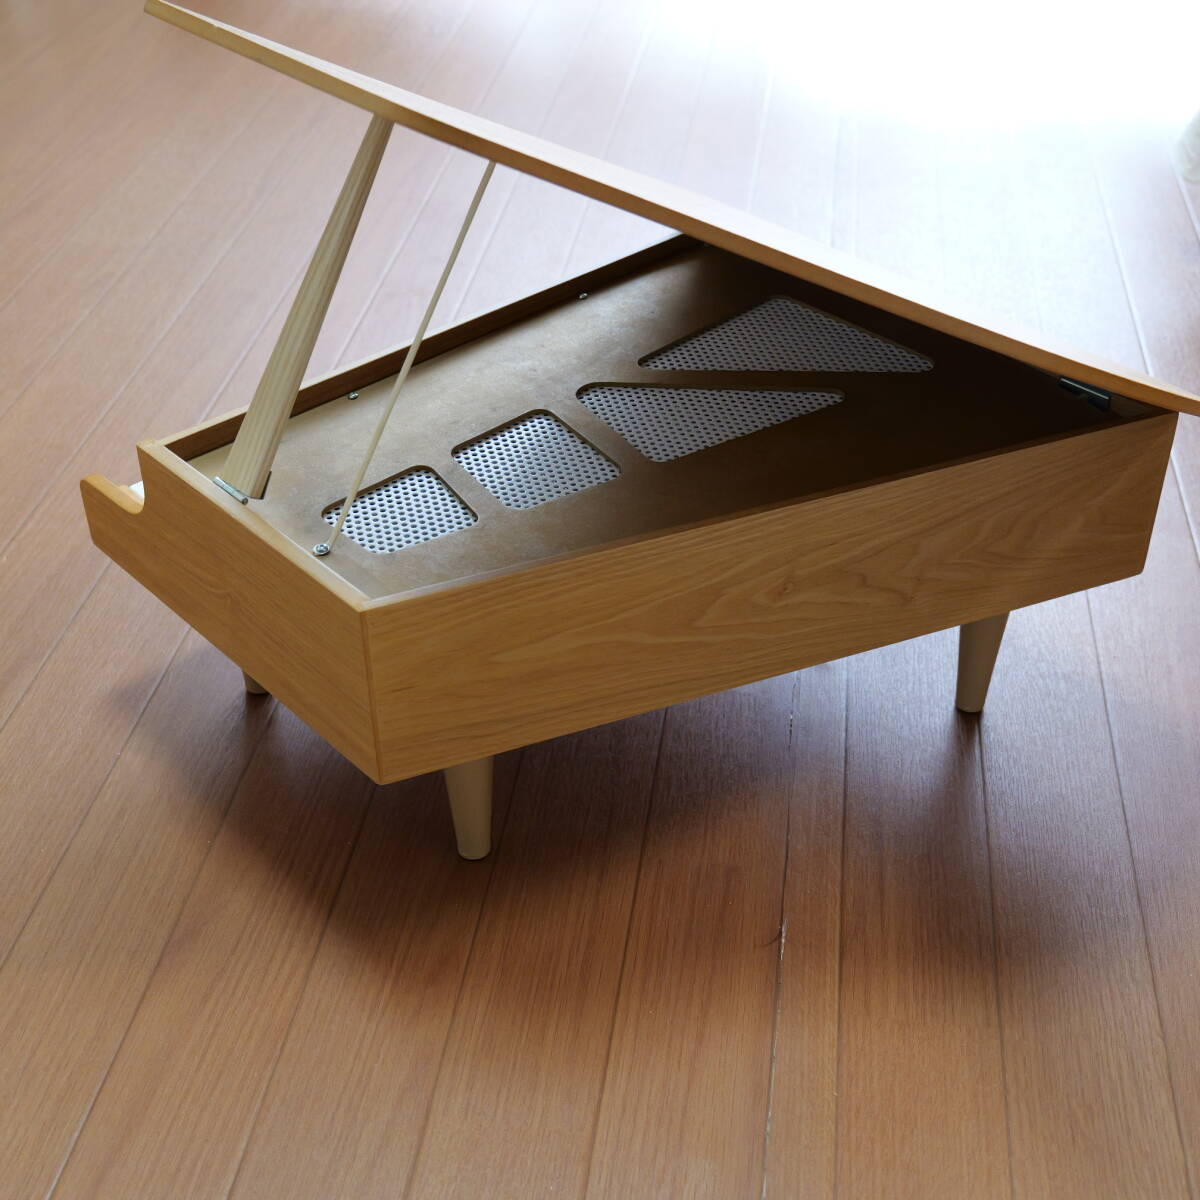 KAWAI Kawai Grand Piano grand piano box attaching toy piano Mini piano 